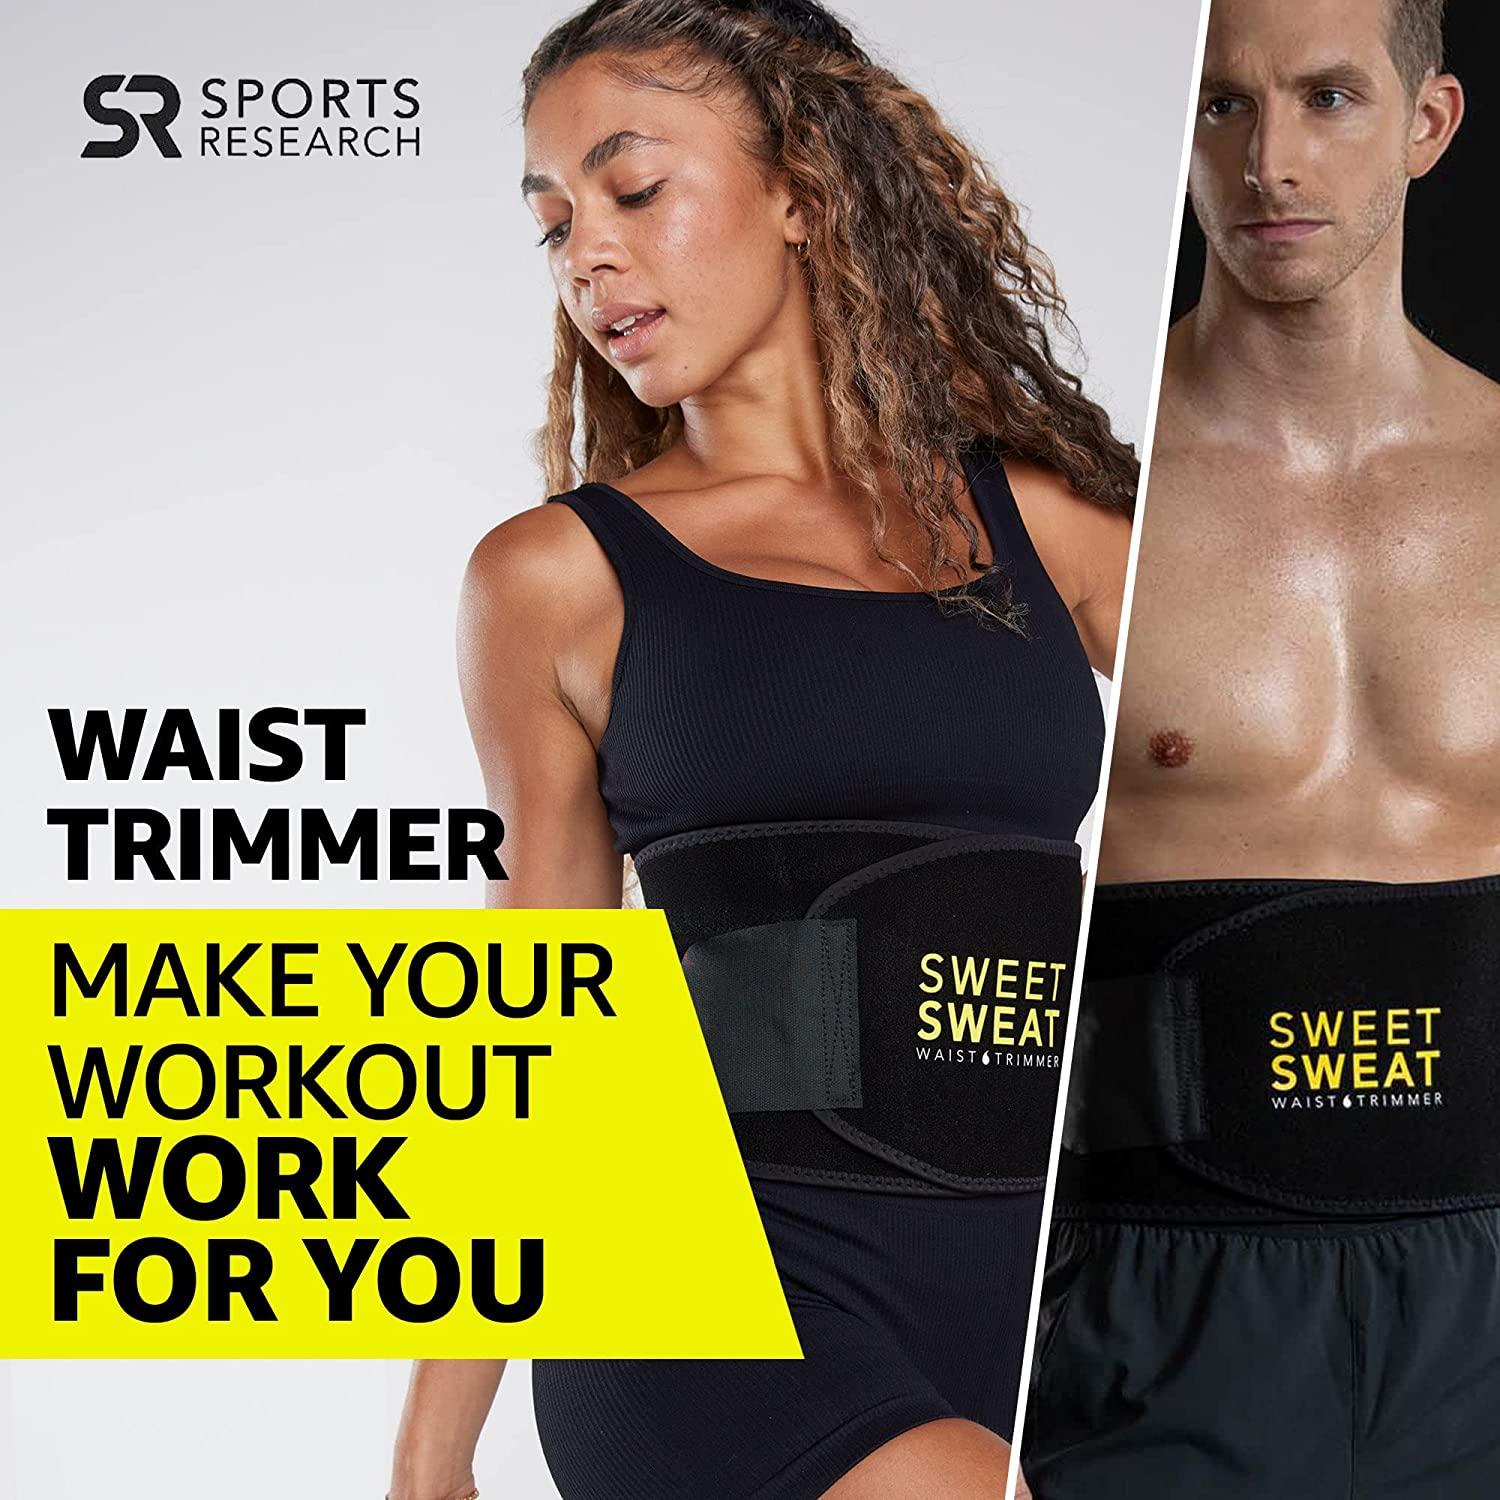 Sweet Sweat Waist Trimmer, Medium, Black & Yellow, 1 Belt